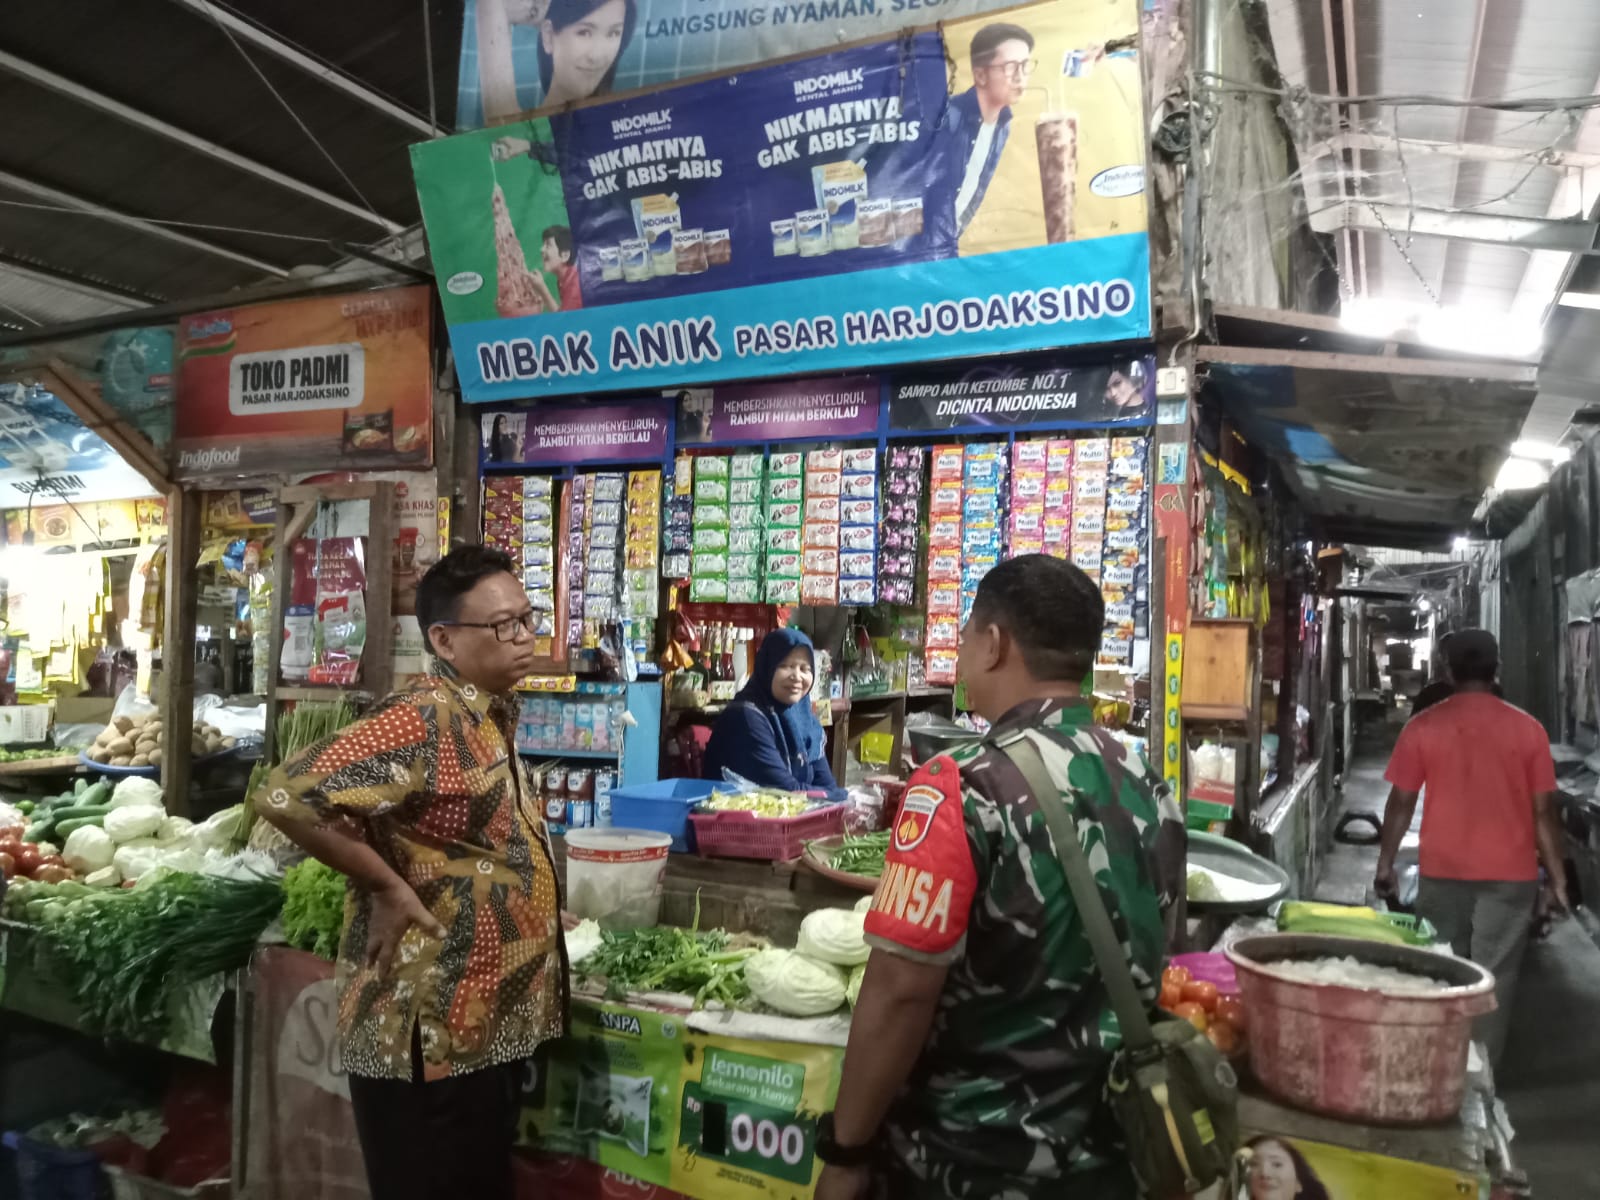 Babinsa Danukusuman & Lurah Pasar Cek Harga Sembako di Pasar Hardjodaksino.